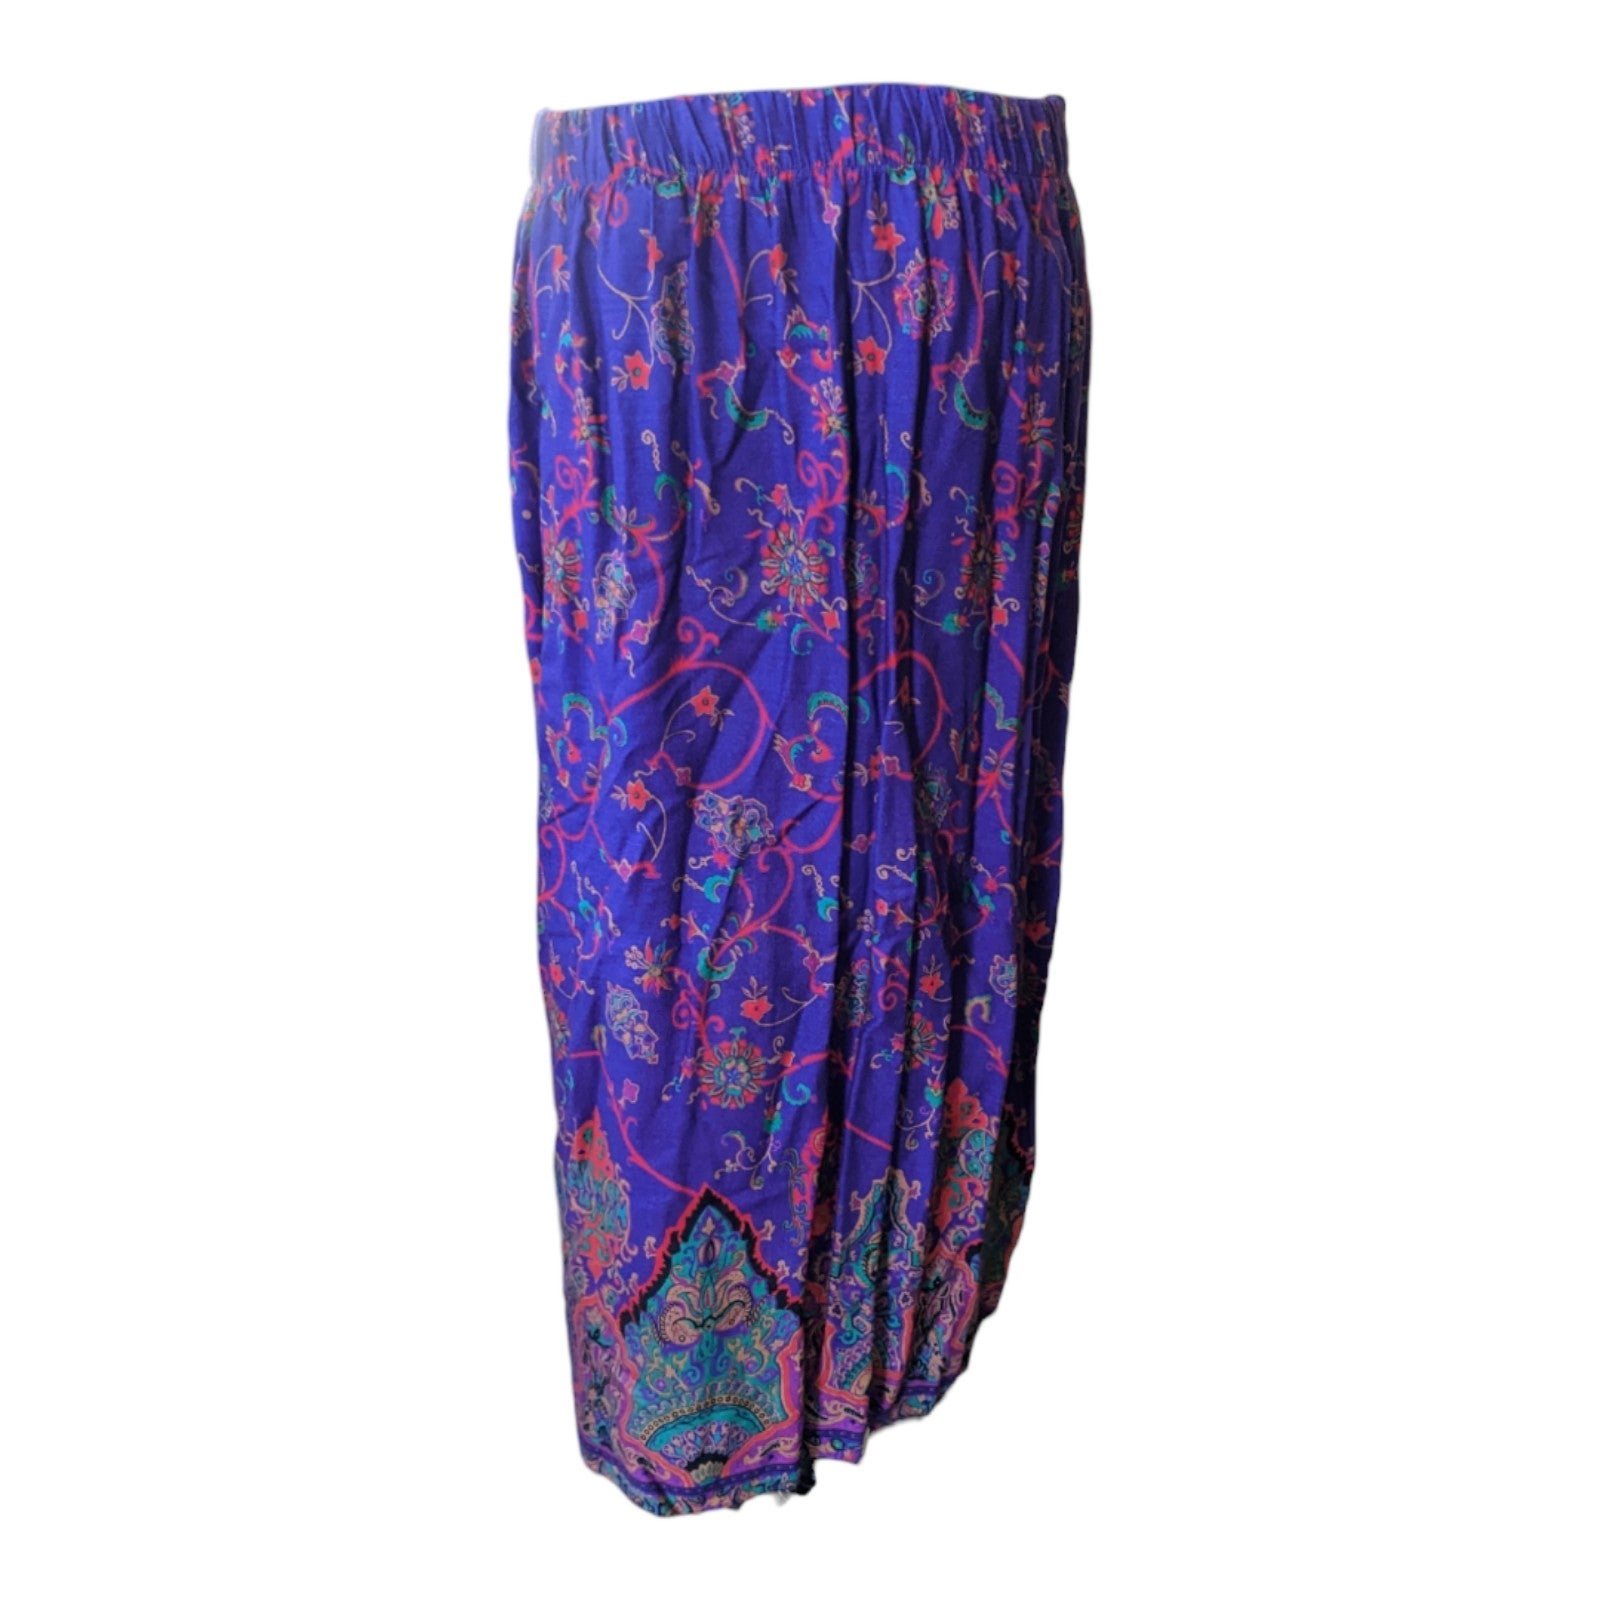 Affordable Vintage Purple Floral Print Side Button Skirt With Pockets By Sweater Loft FGdfJZkMn US Sale